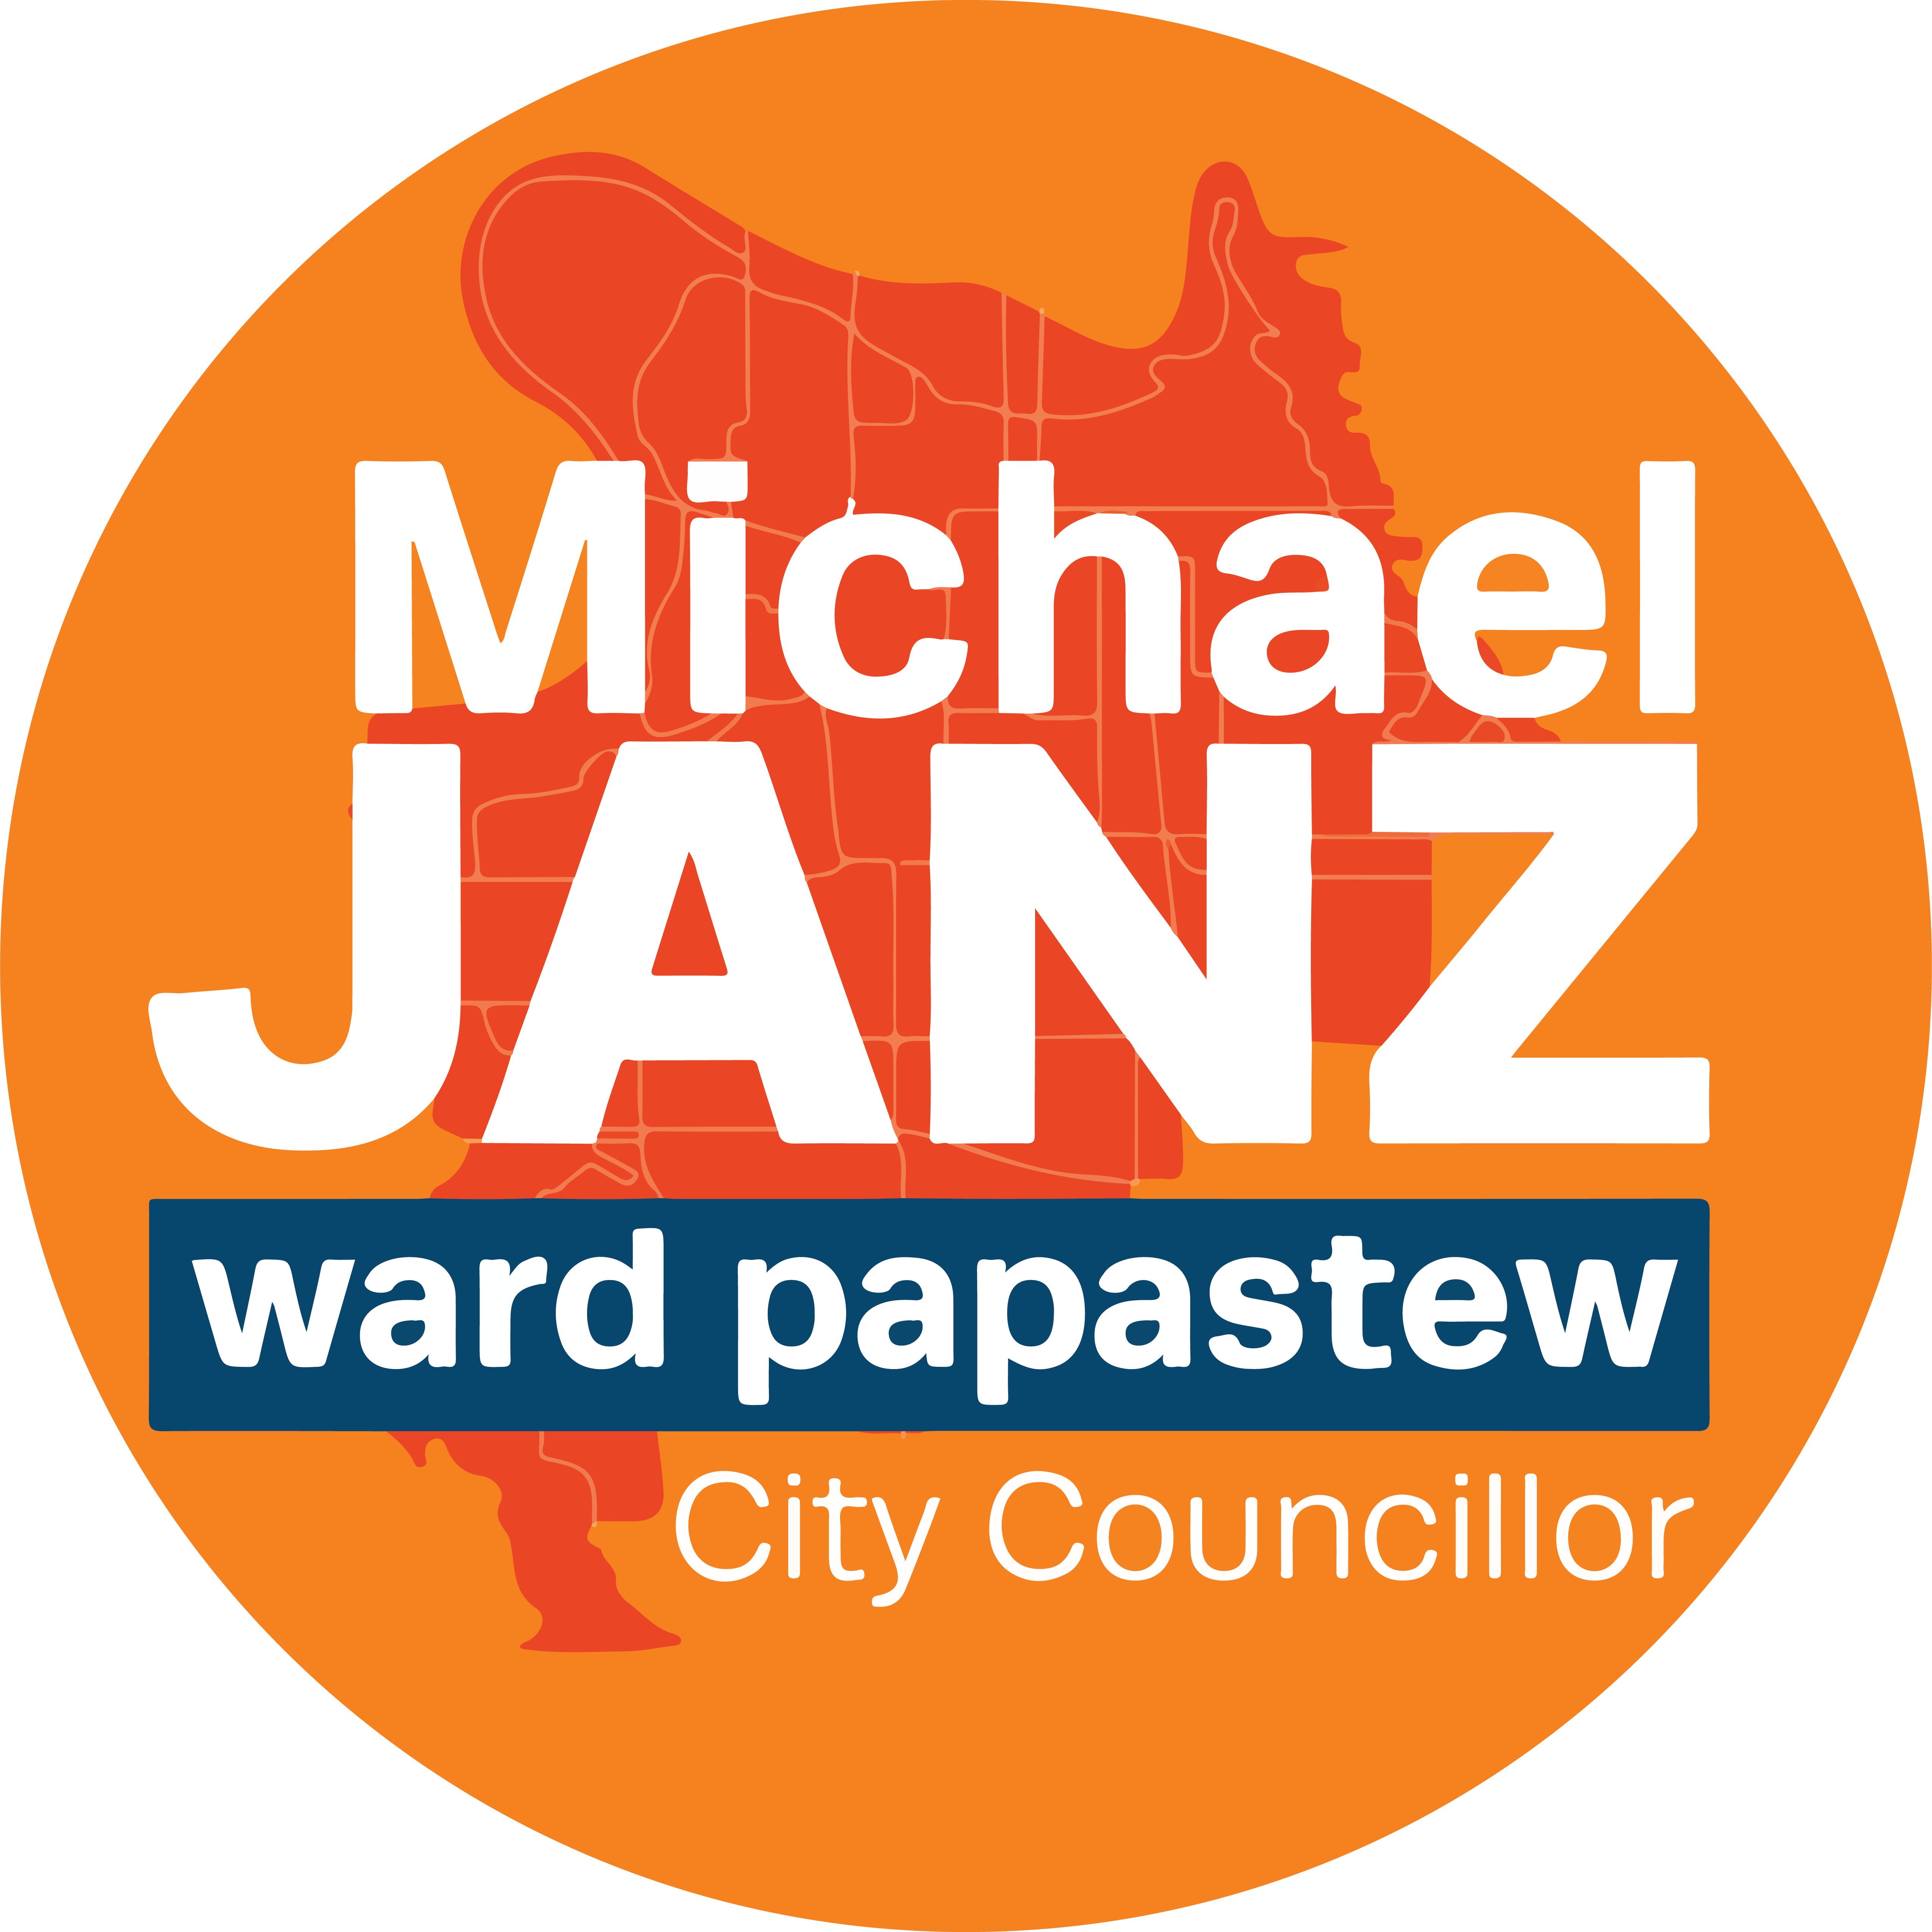 Councillor Michael Janz for ward papastew